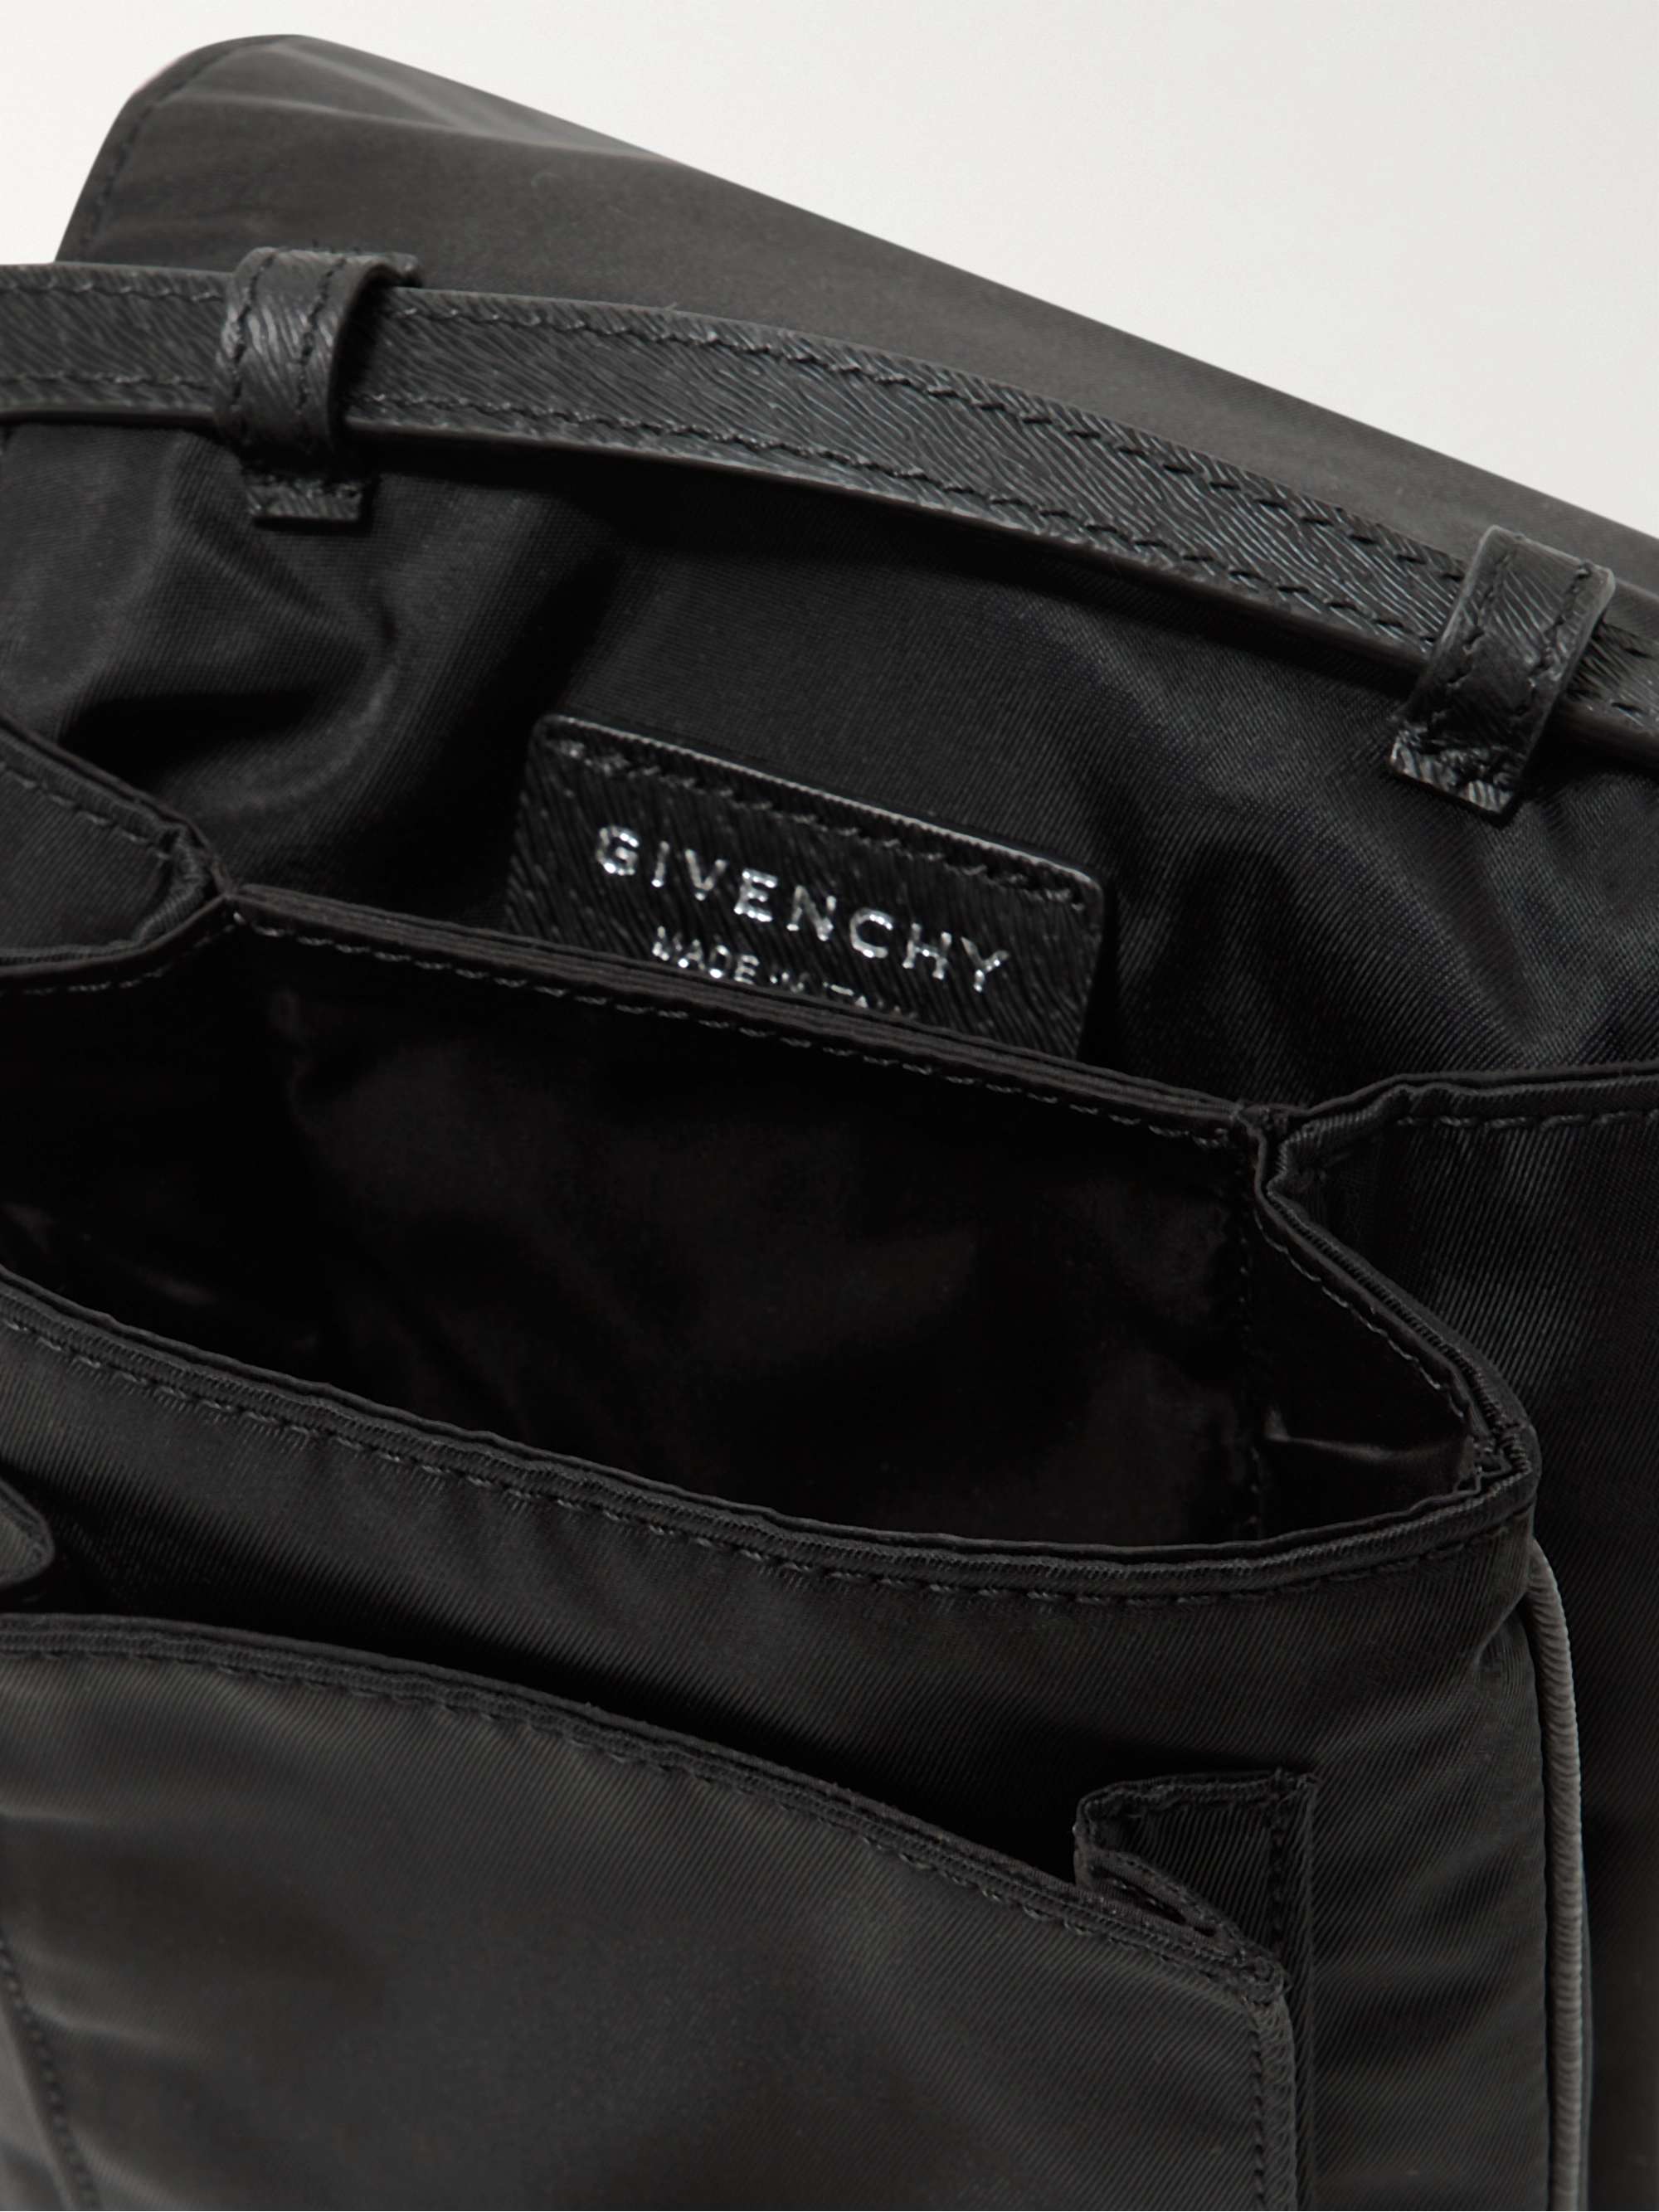 GIVENCHY Logo-Appliquéd Leather-Trimmed Nylon Pouch